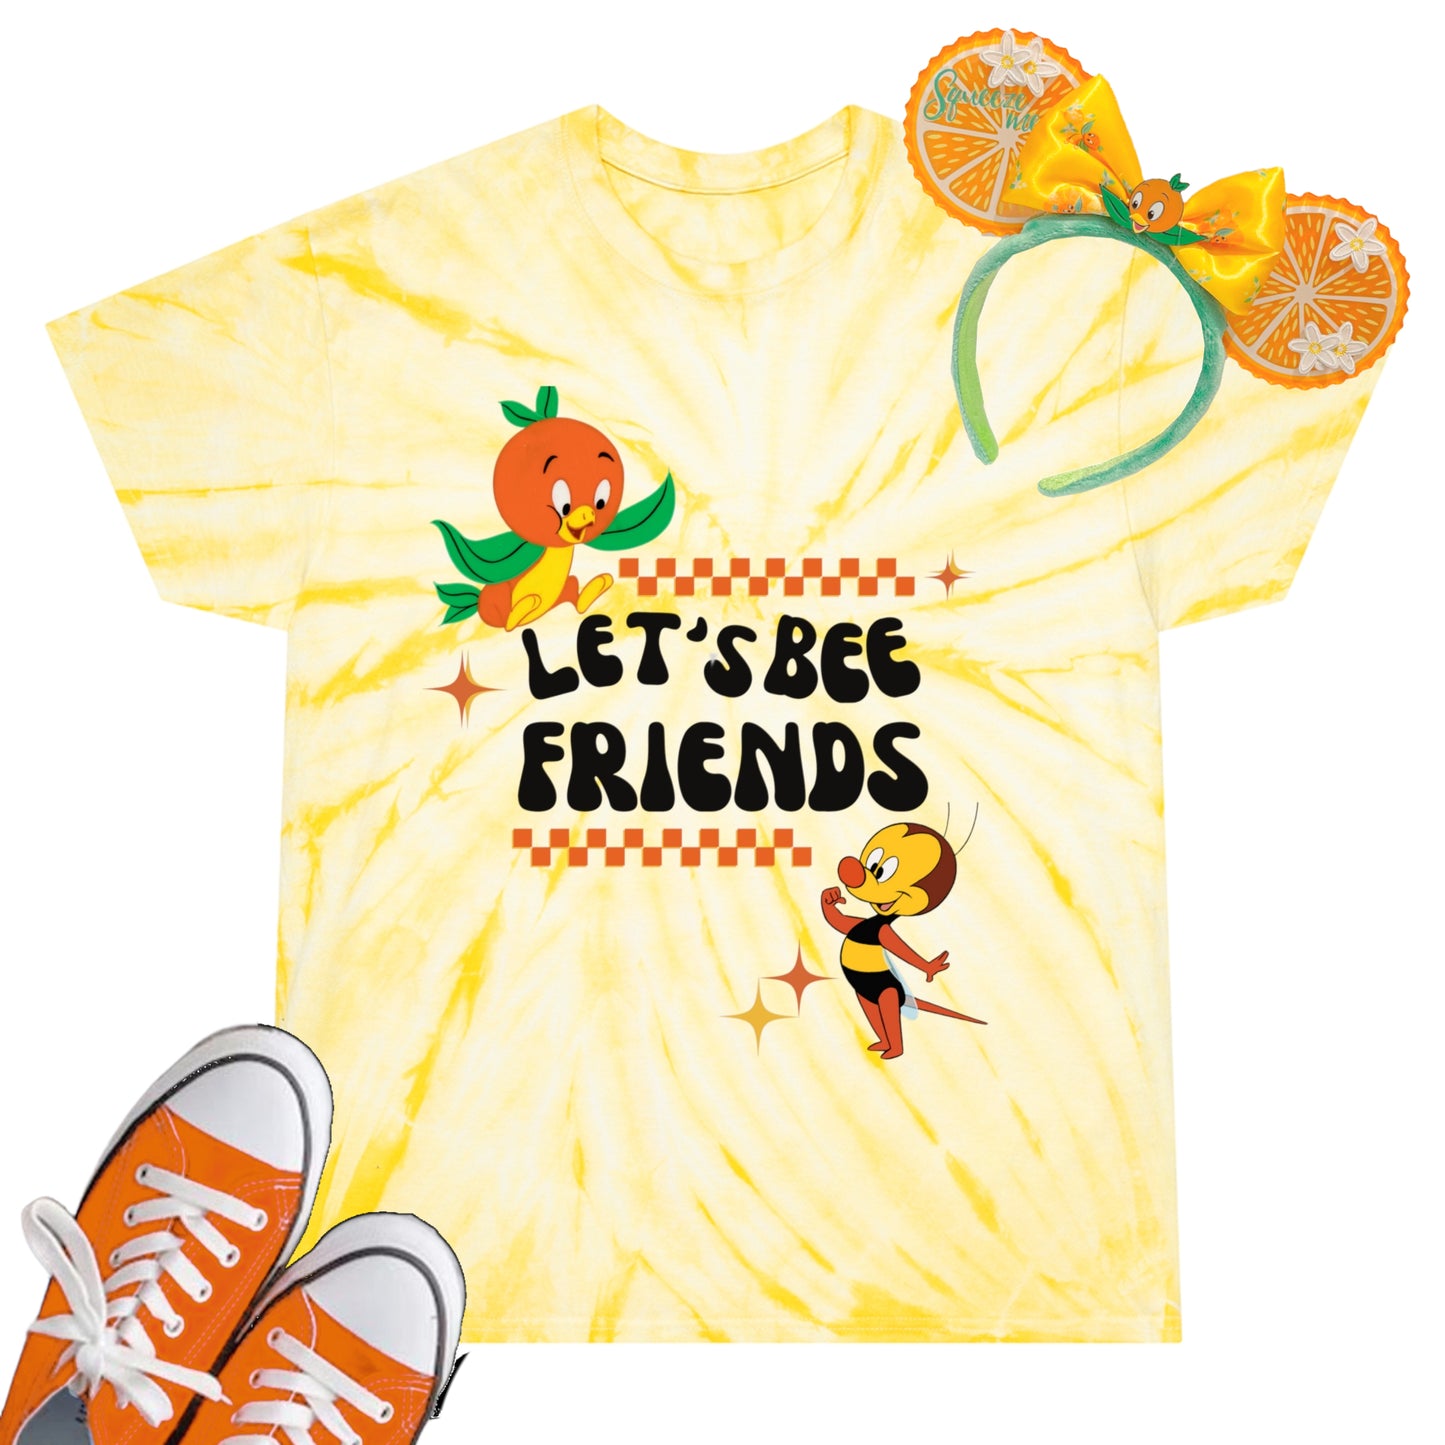 Orange Bird and Spike the Bee T-Shirt shirt 